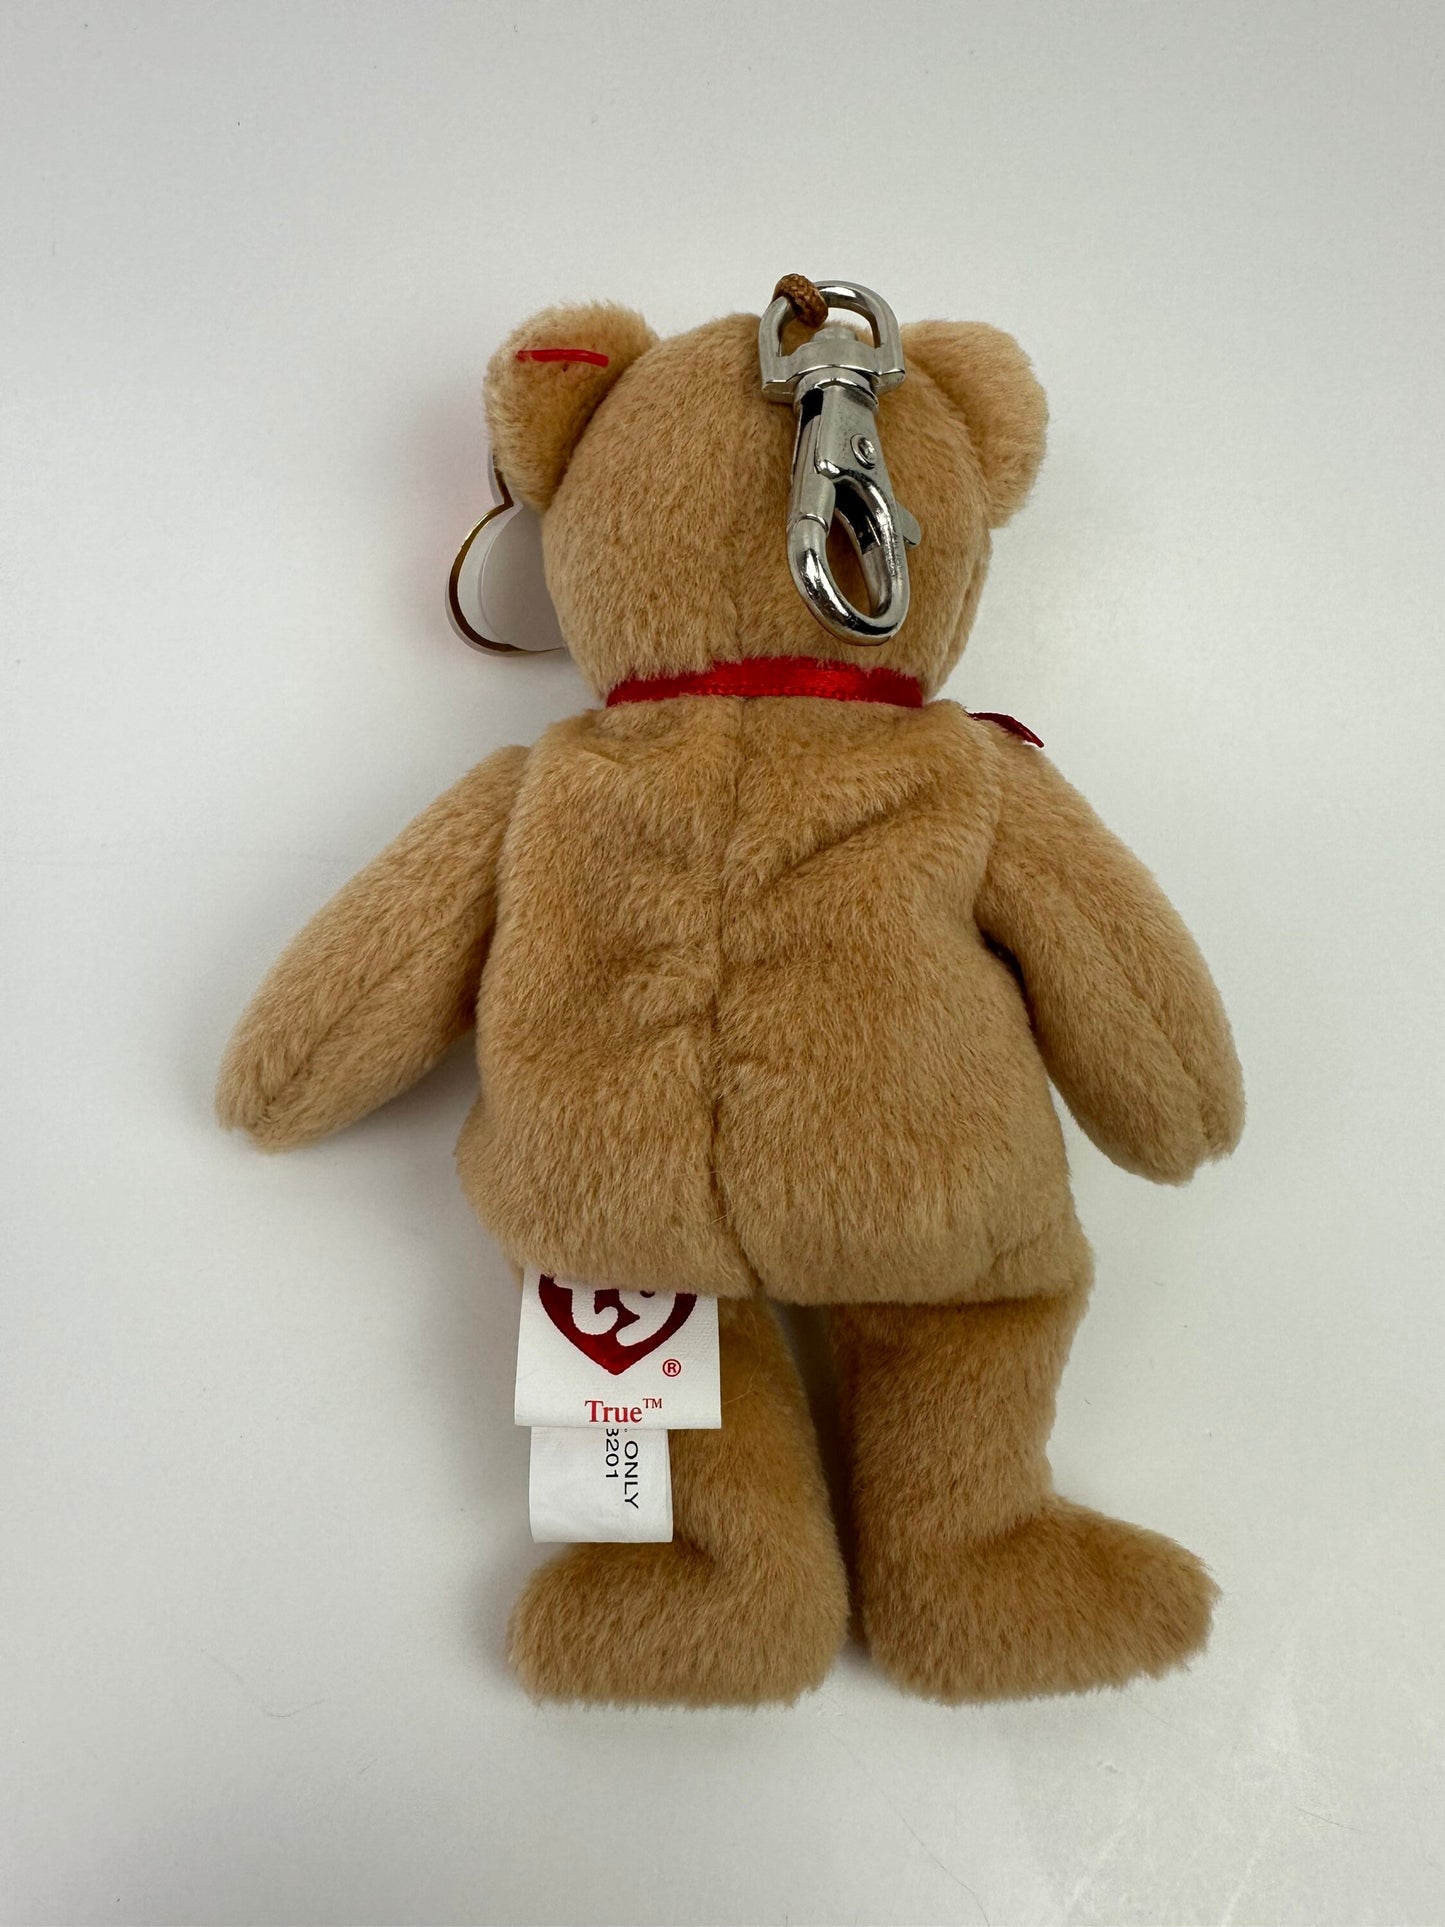 Ty Key Clip / KeyChain “True” the Bear - Metal Key Clip (4 inch)